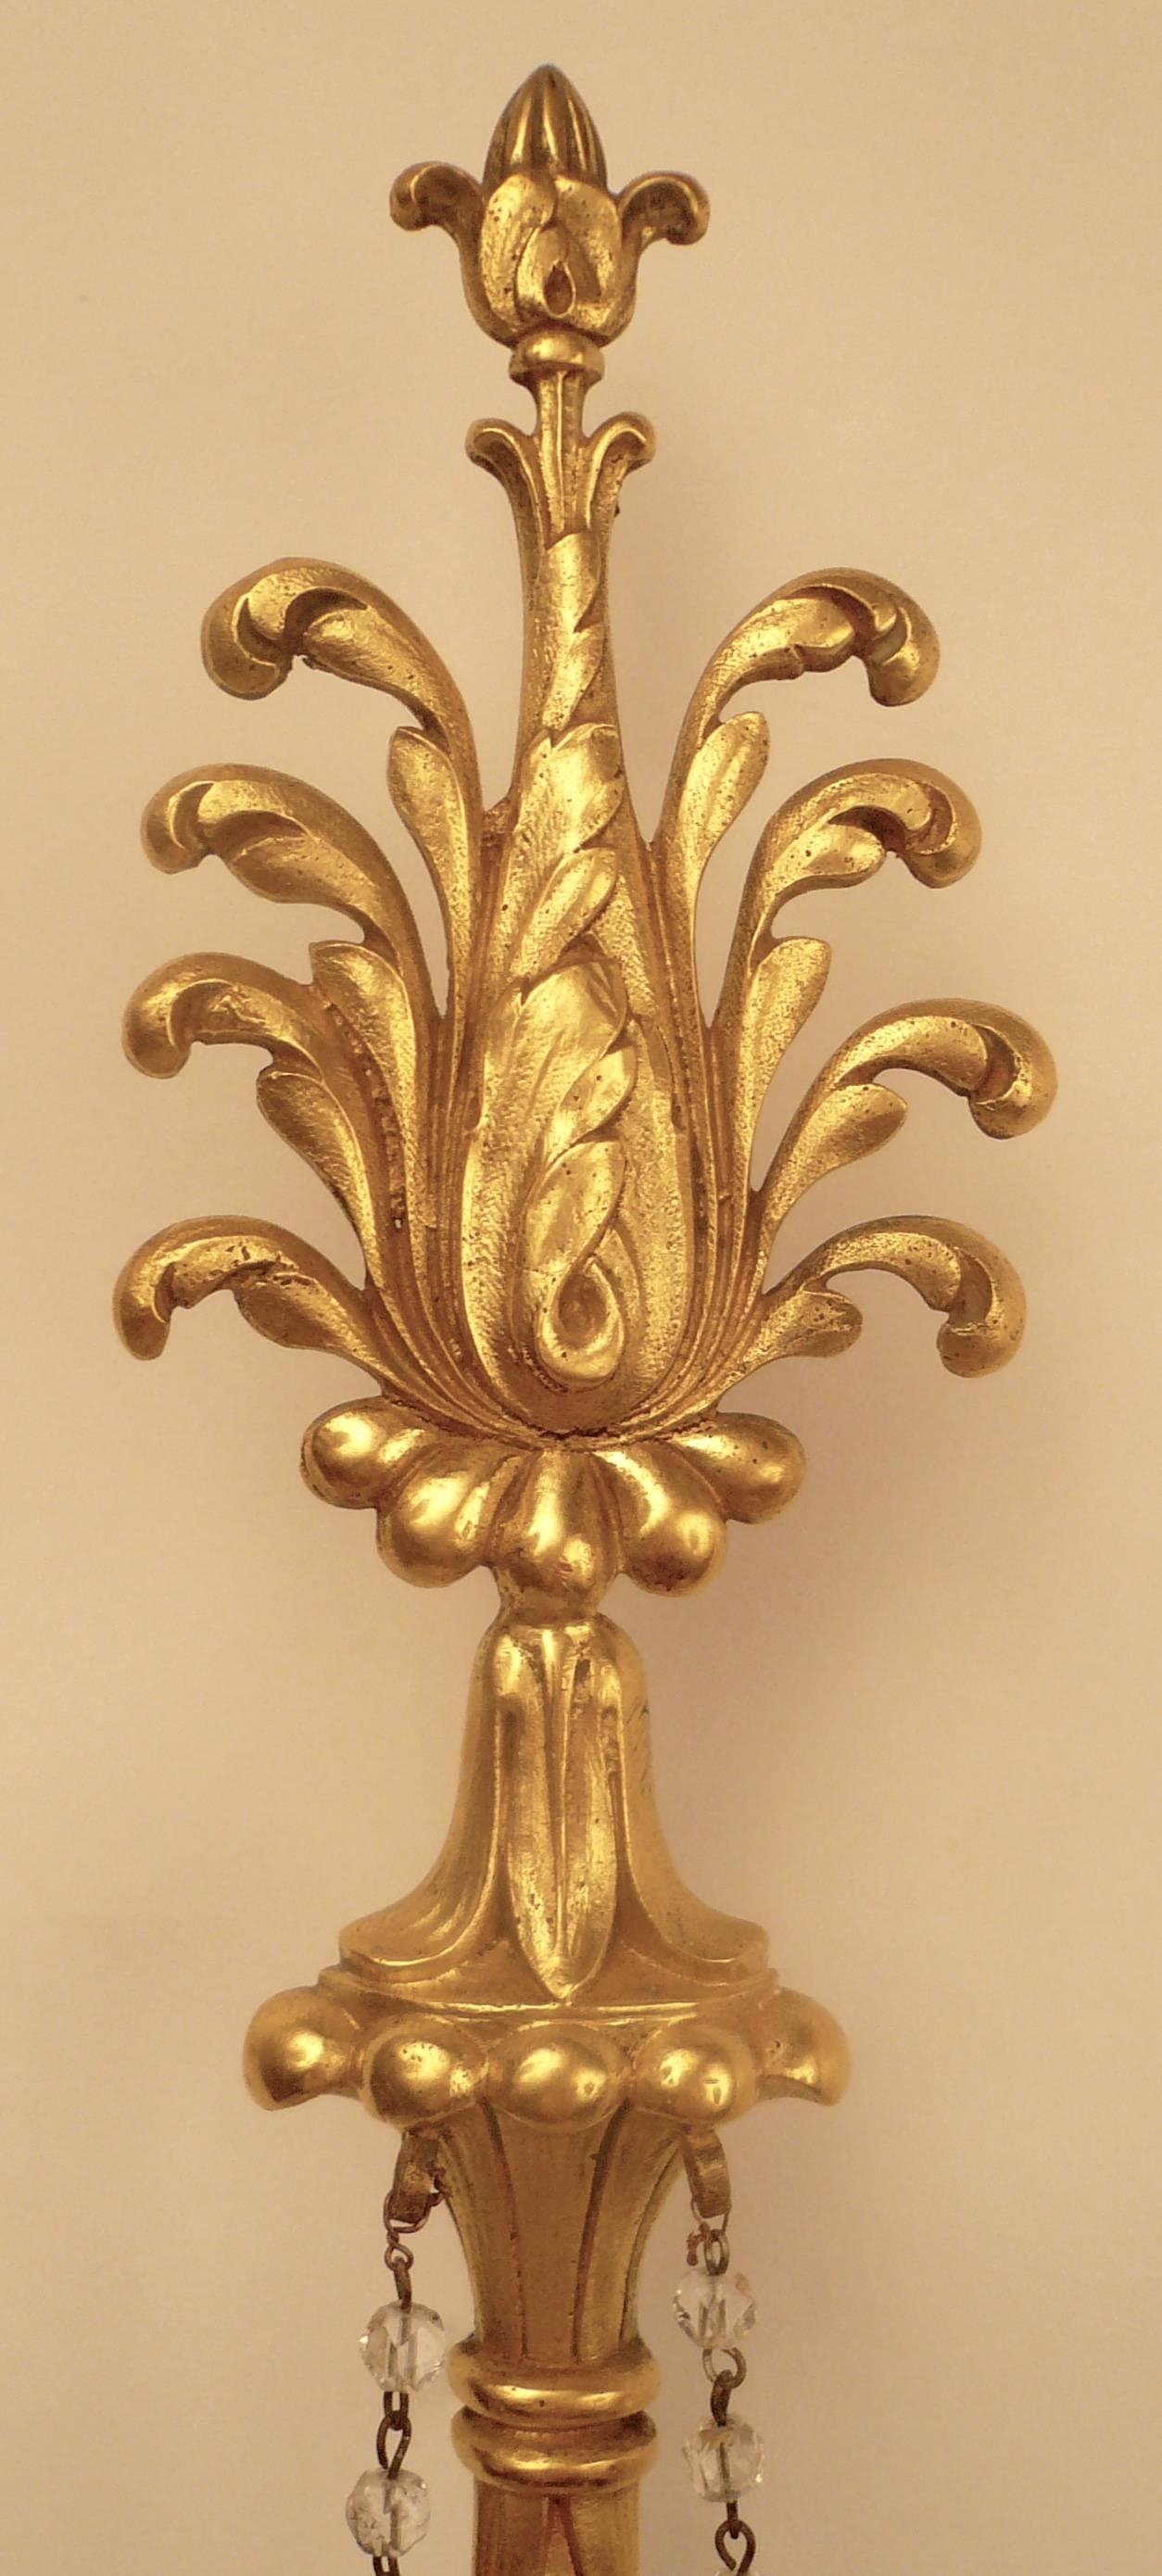 20th Century Gilt Bronze and Wedgwood Jasperware Sconces in the Style of Robert Adam